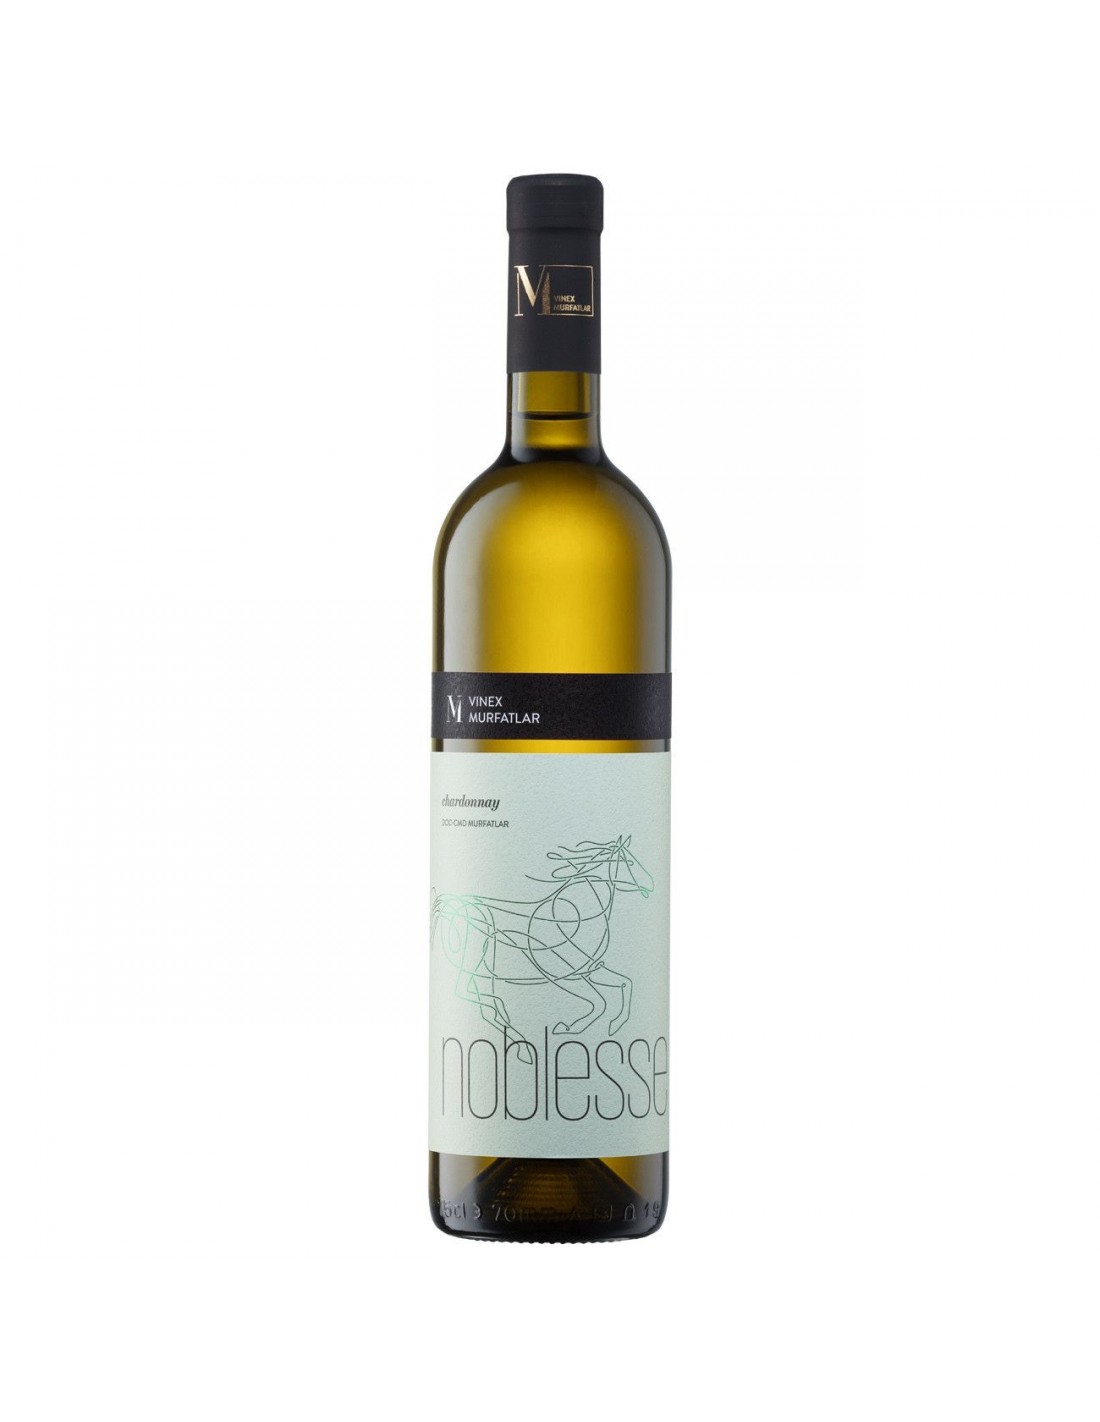 Vin alb sec, Chardonnay, Noblesse Murfatlar, 0.75L, 13% alc., Romania alcooldiscount.ro